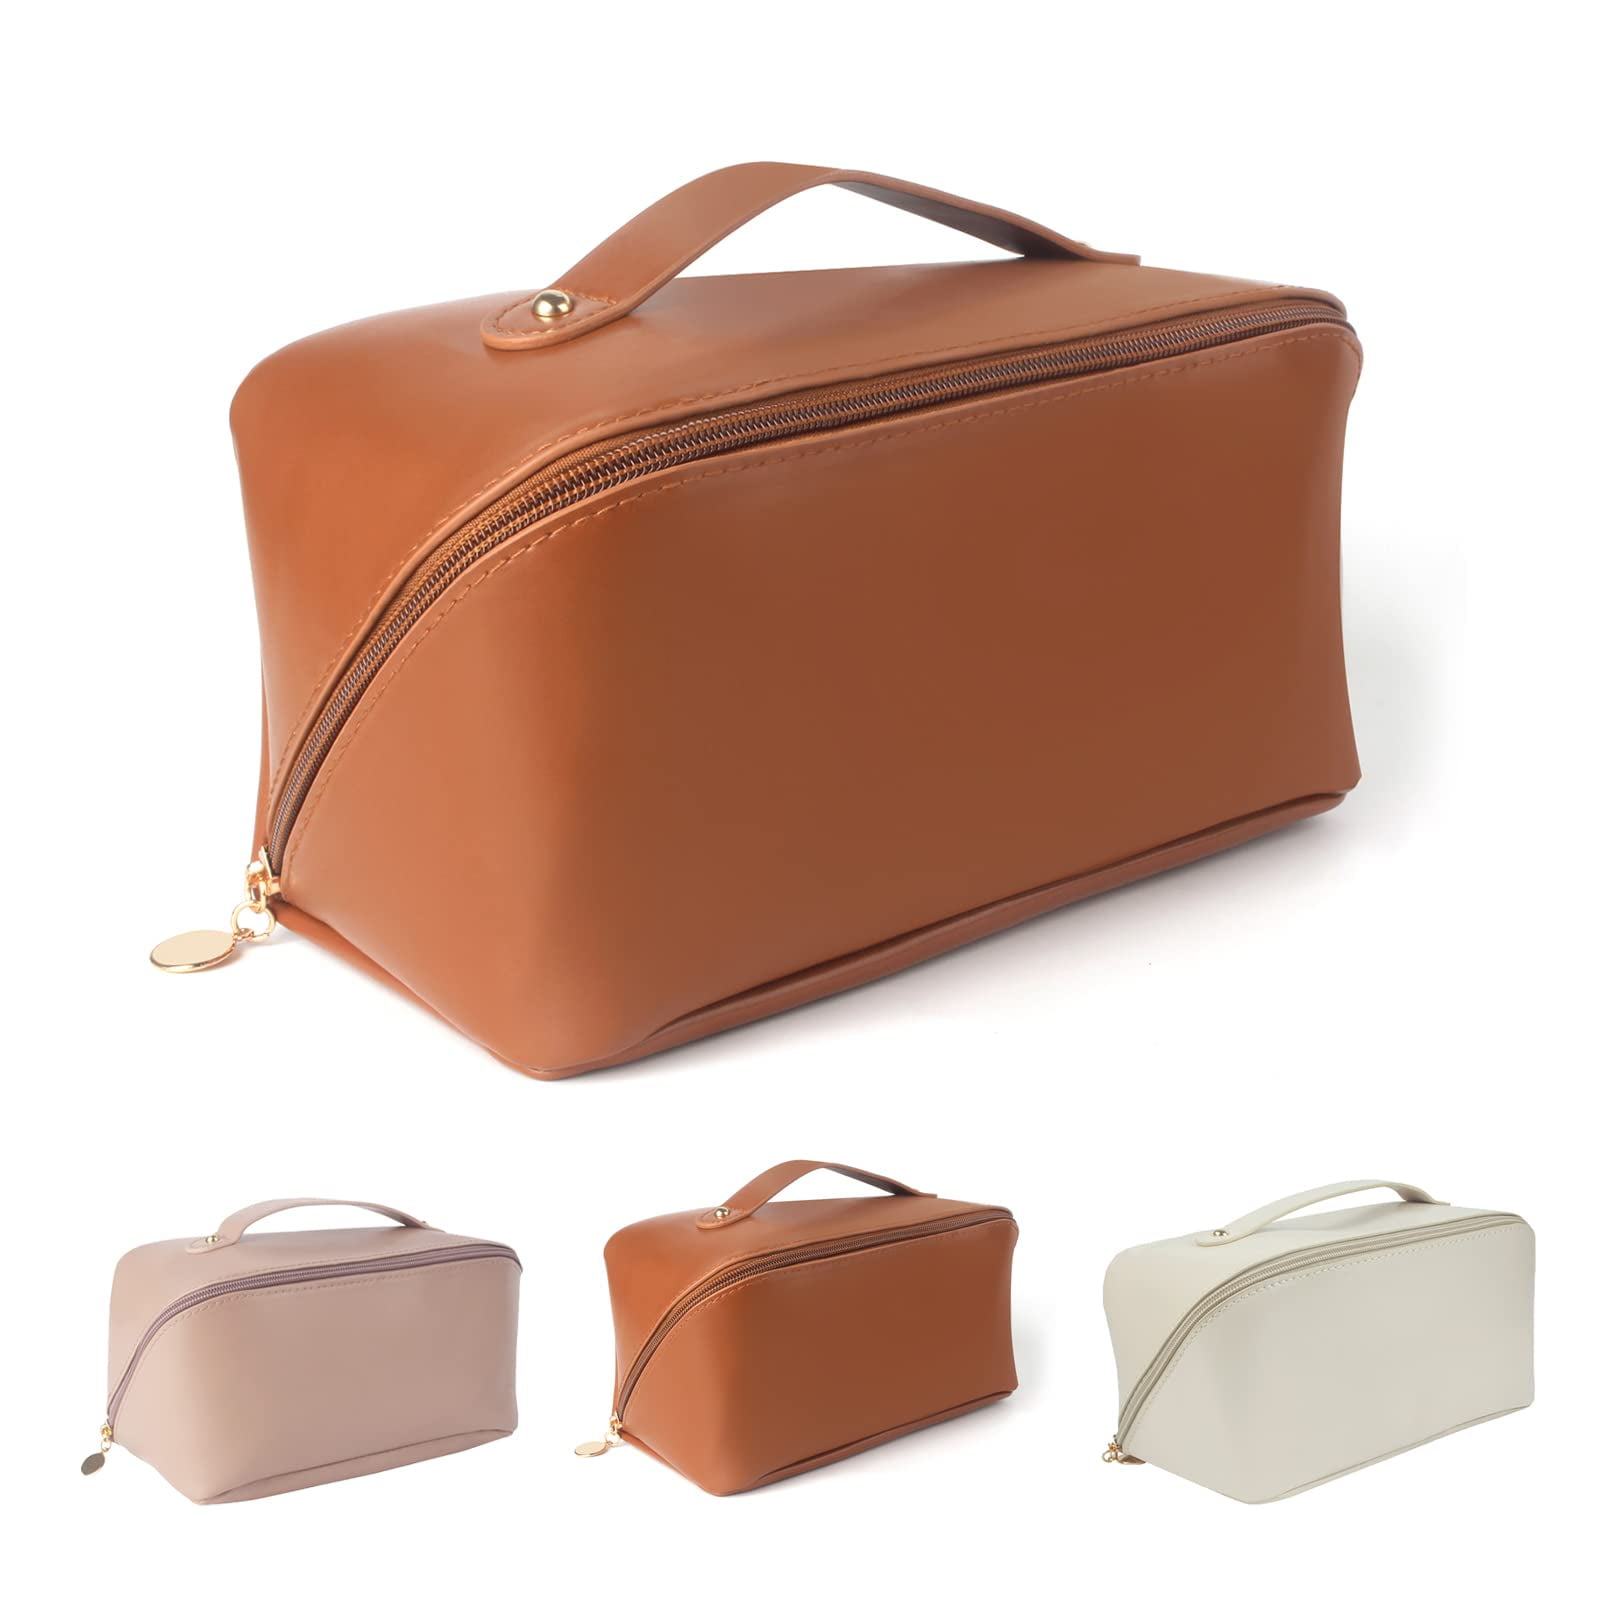 LURZVYEQ Large Capacity Travel Cosmetic Bag Makeup Bag Opens Flat